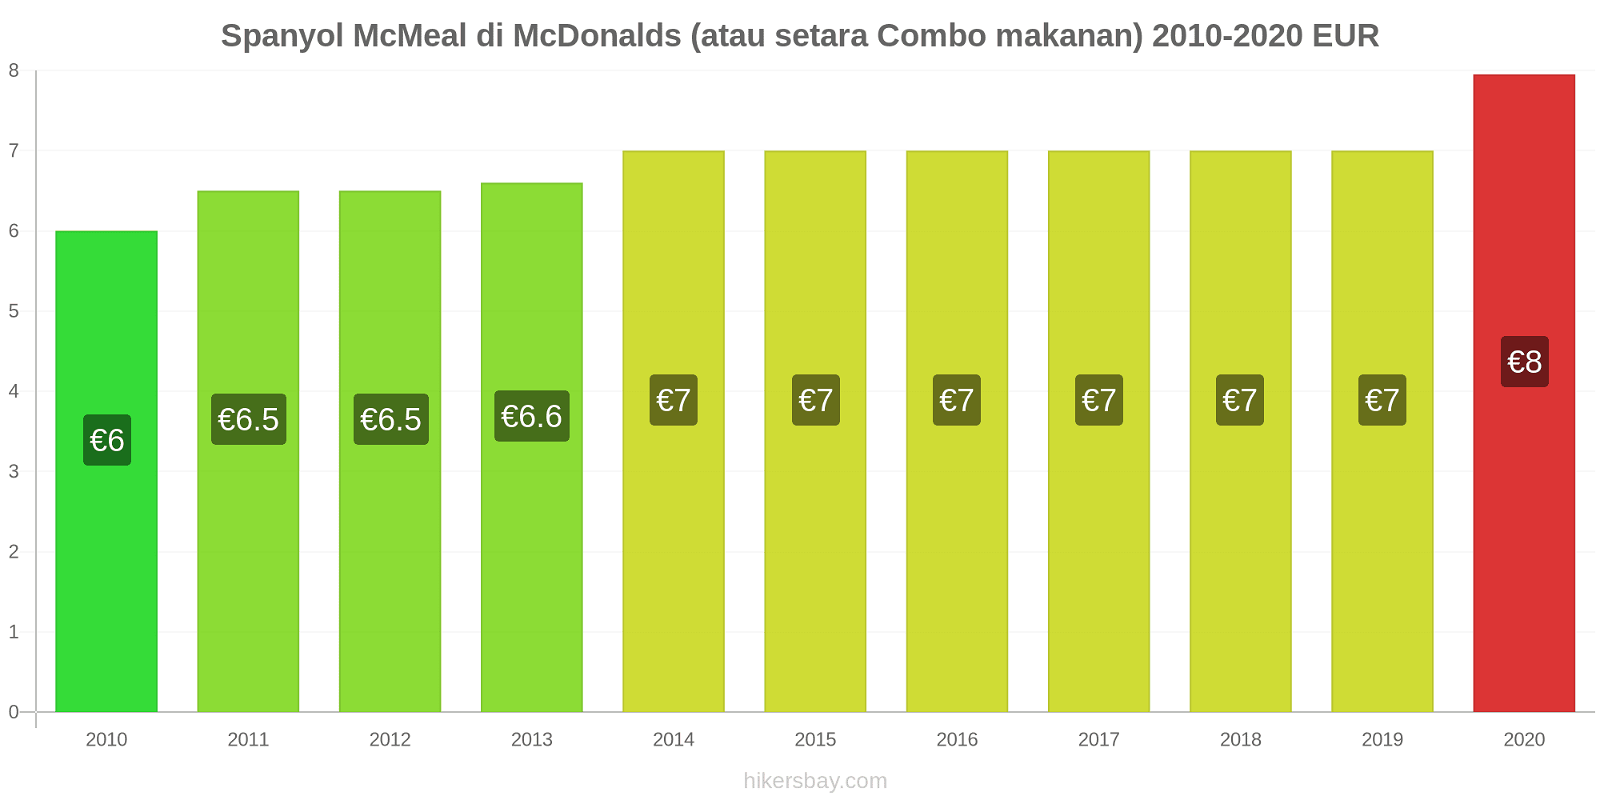 Spanyol perubahan harga McMeal di McDonalds (atau setara Combo makanan) hikersbay.com